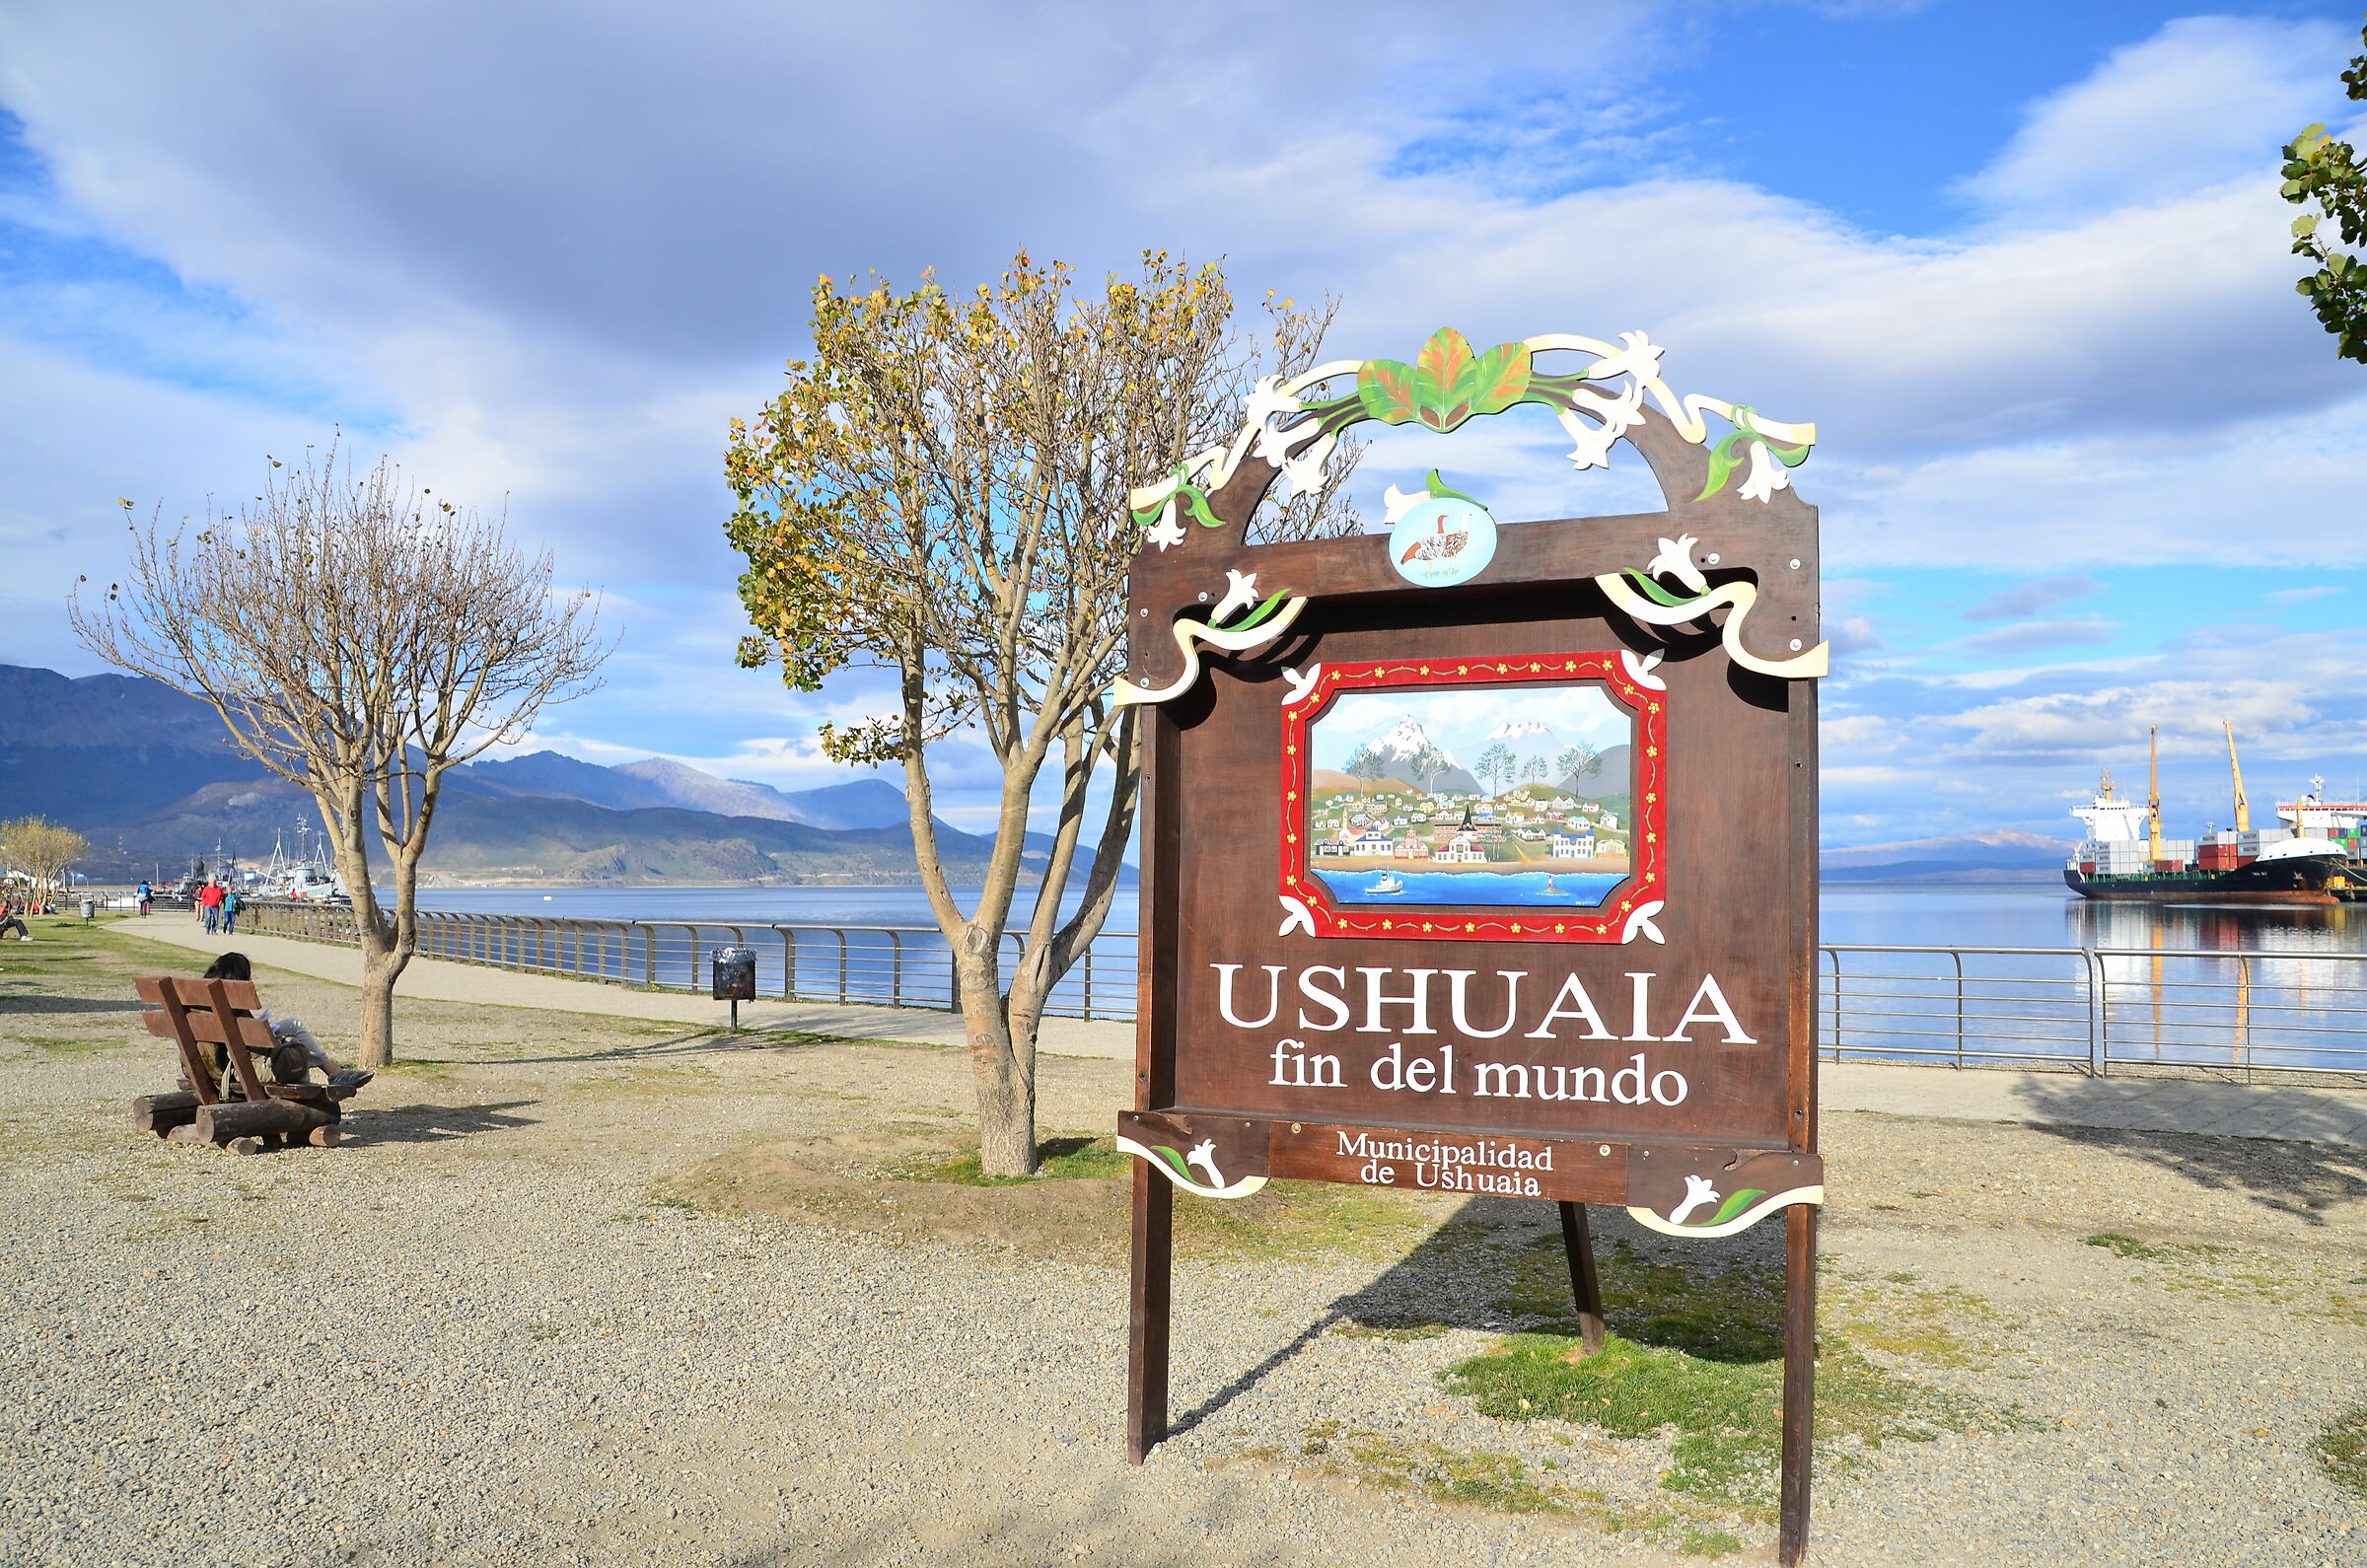 Ushuaia, 1000 km from the Antarctic...